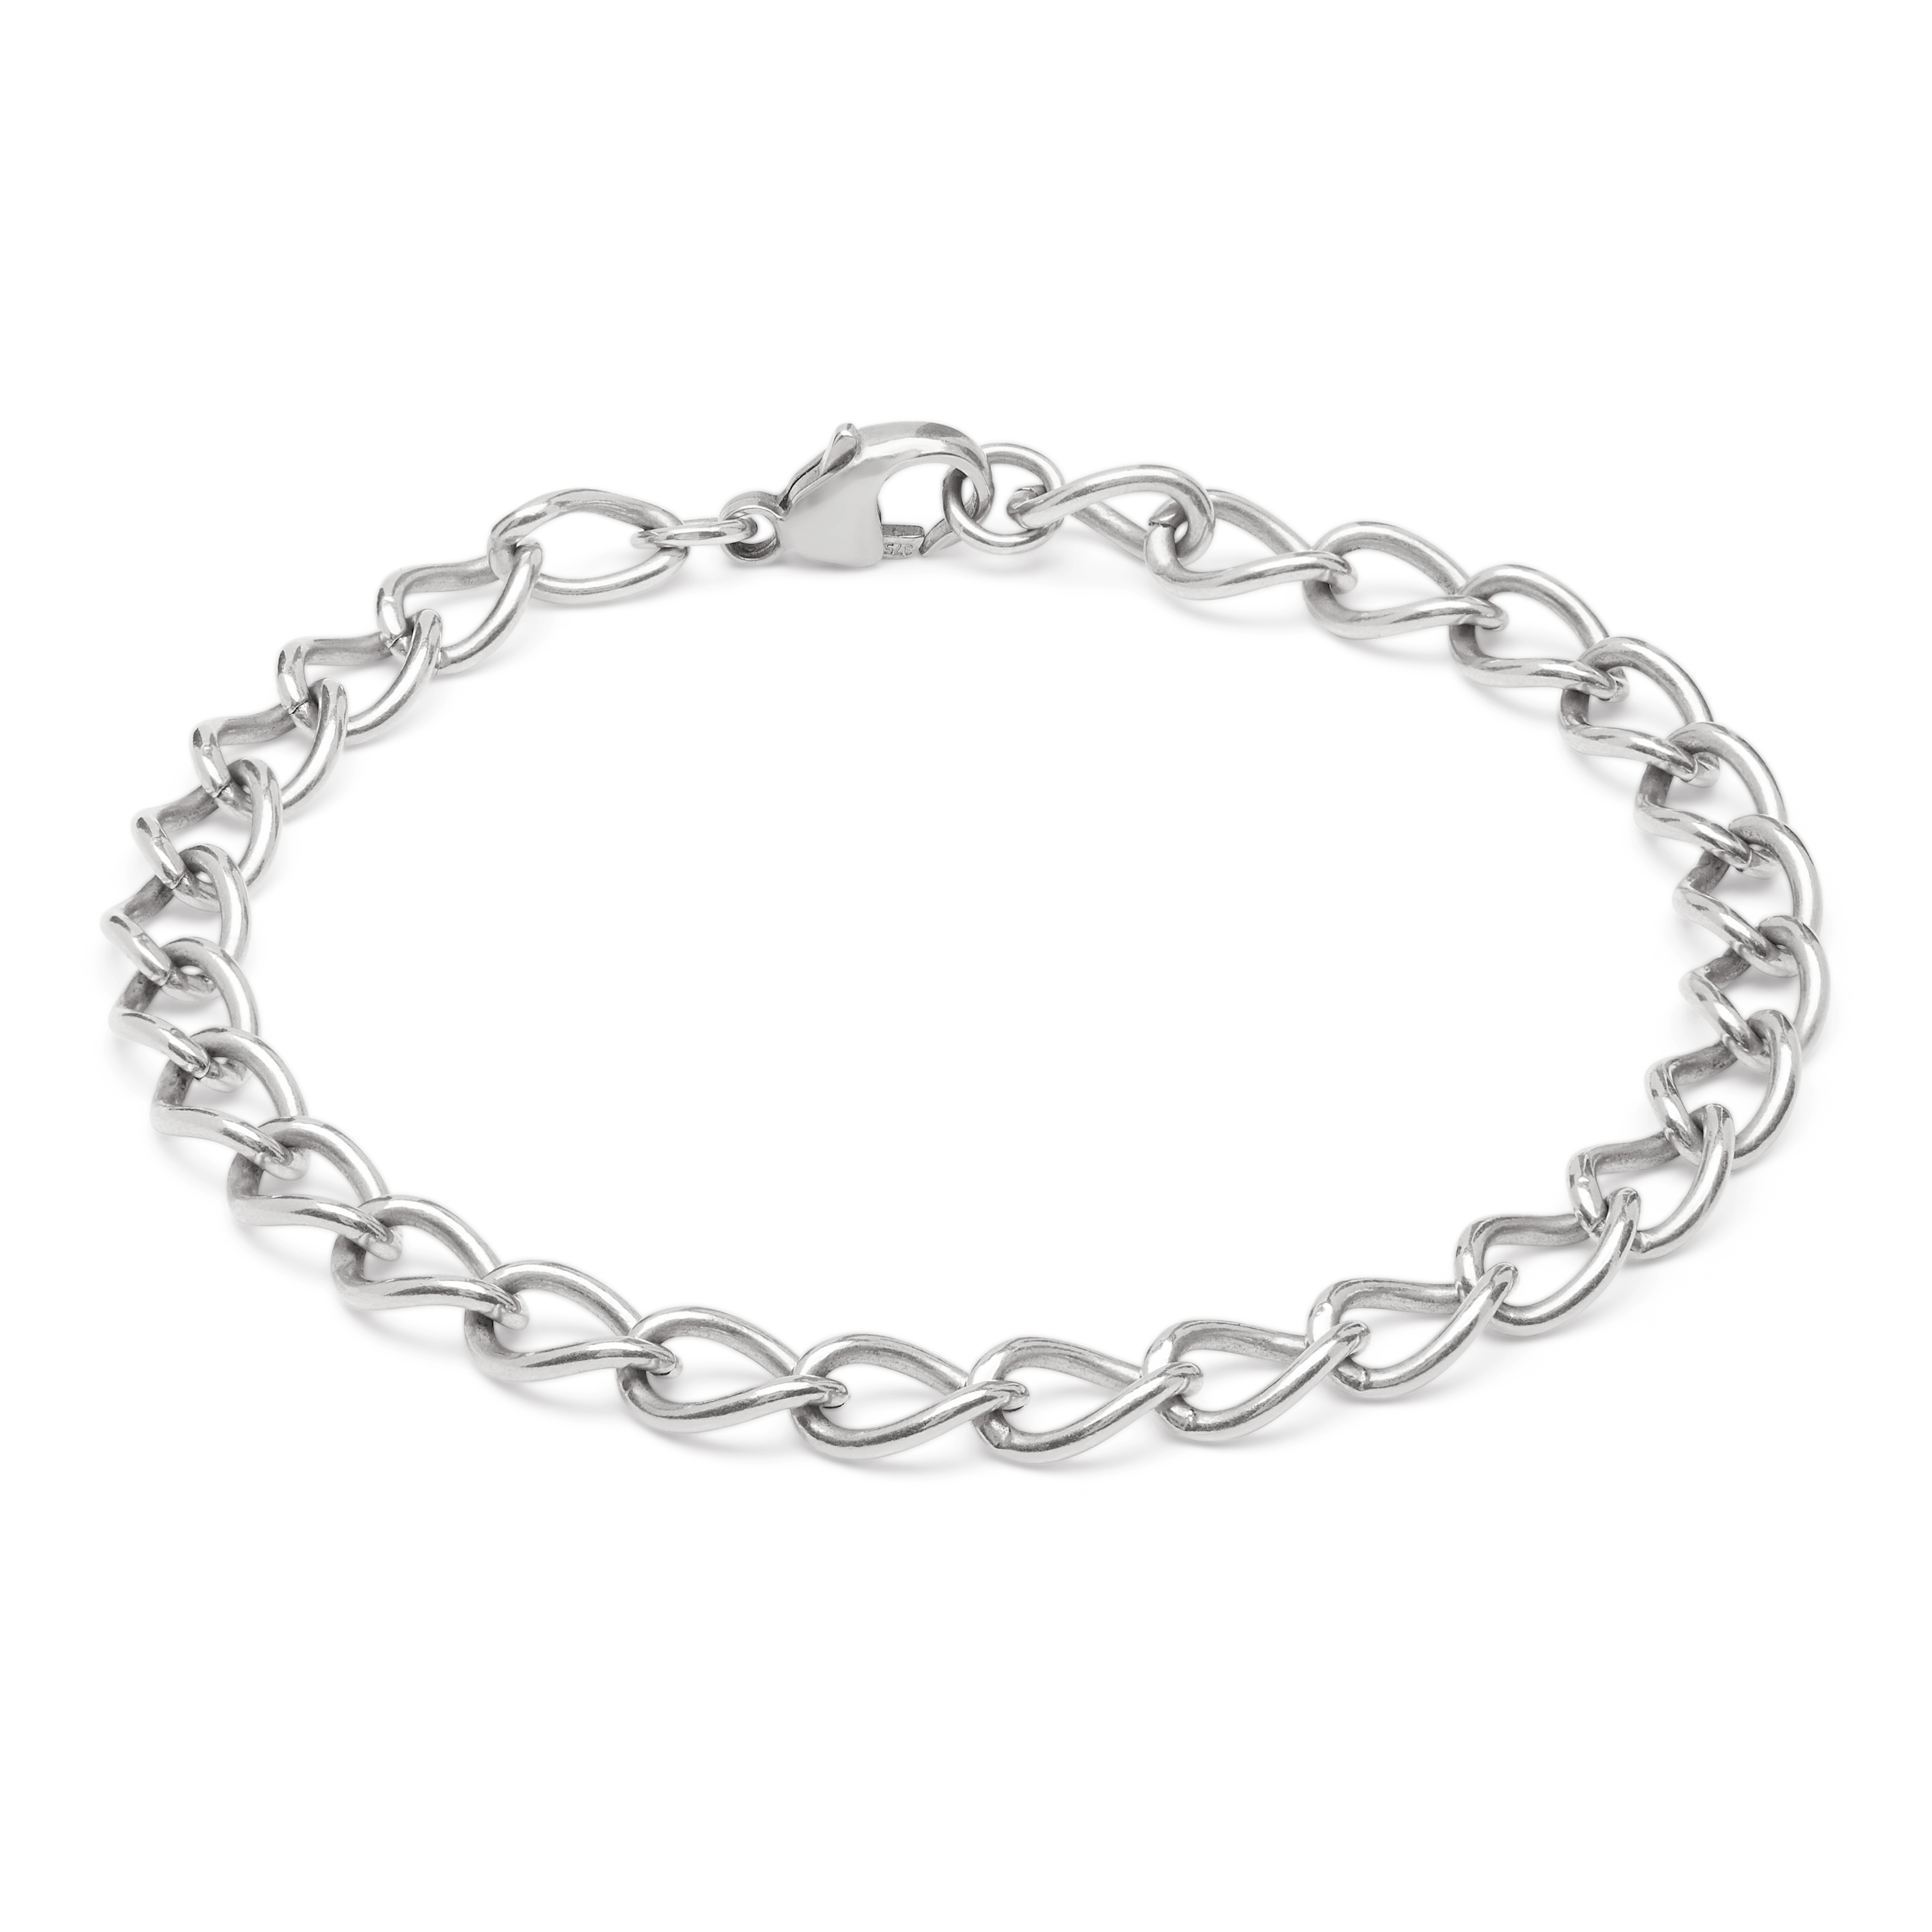 Silver Bracelet Chains | Philippa Herbert